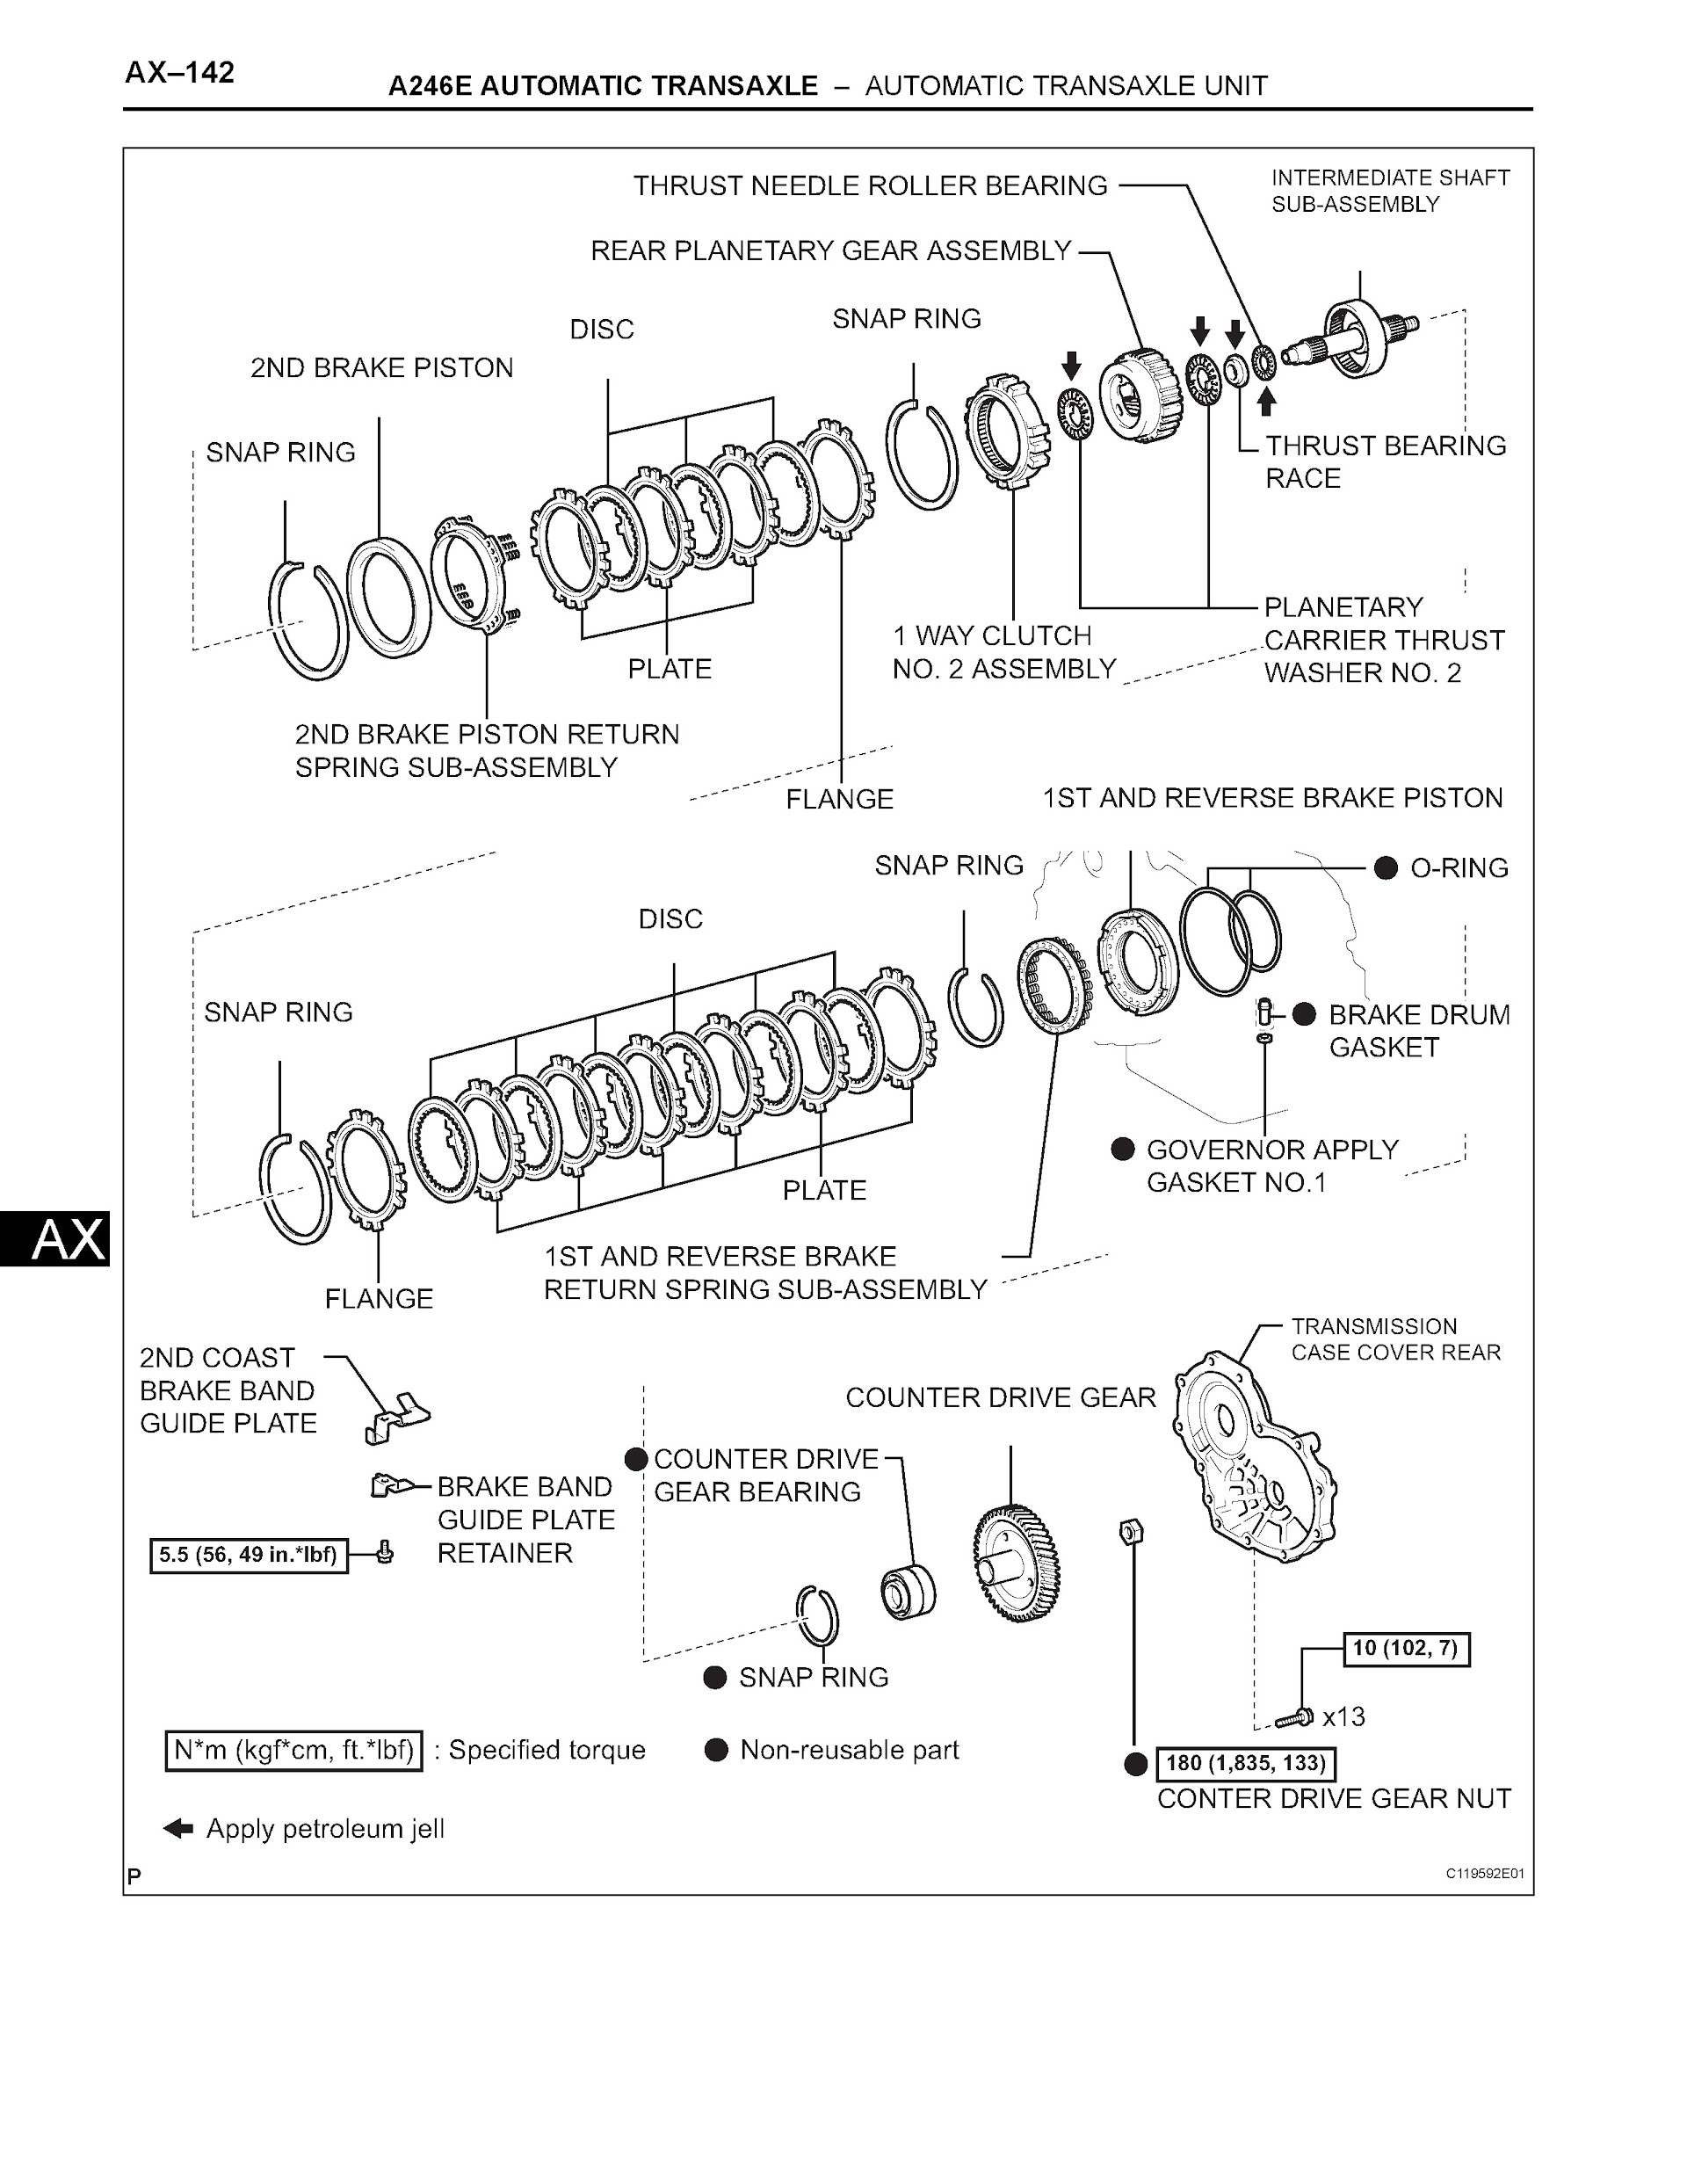 2007 Toyota Corolla Matrix Repair Manual, A246E Automatic Transaxle